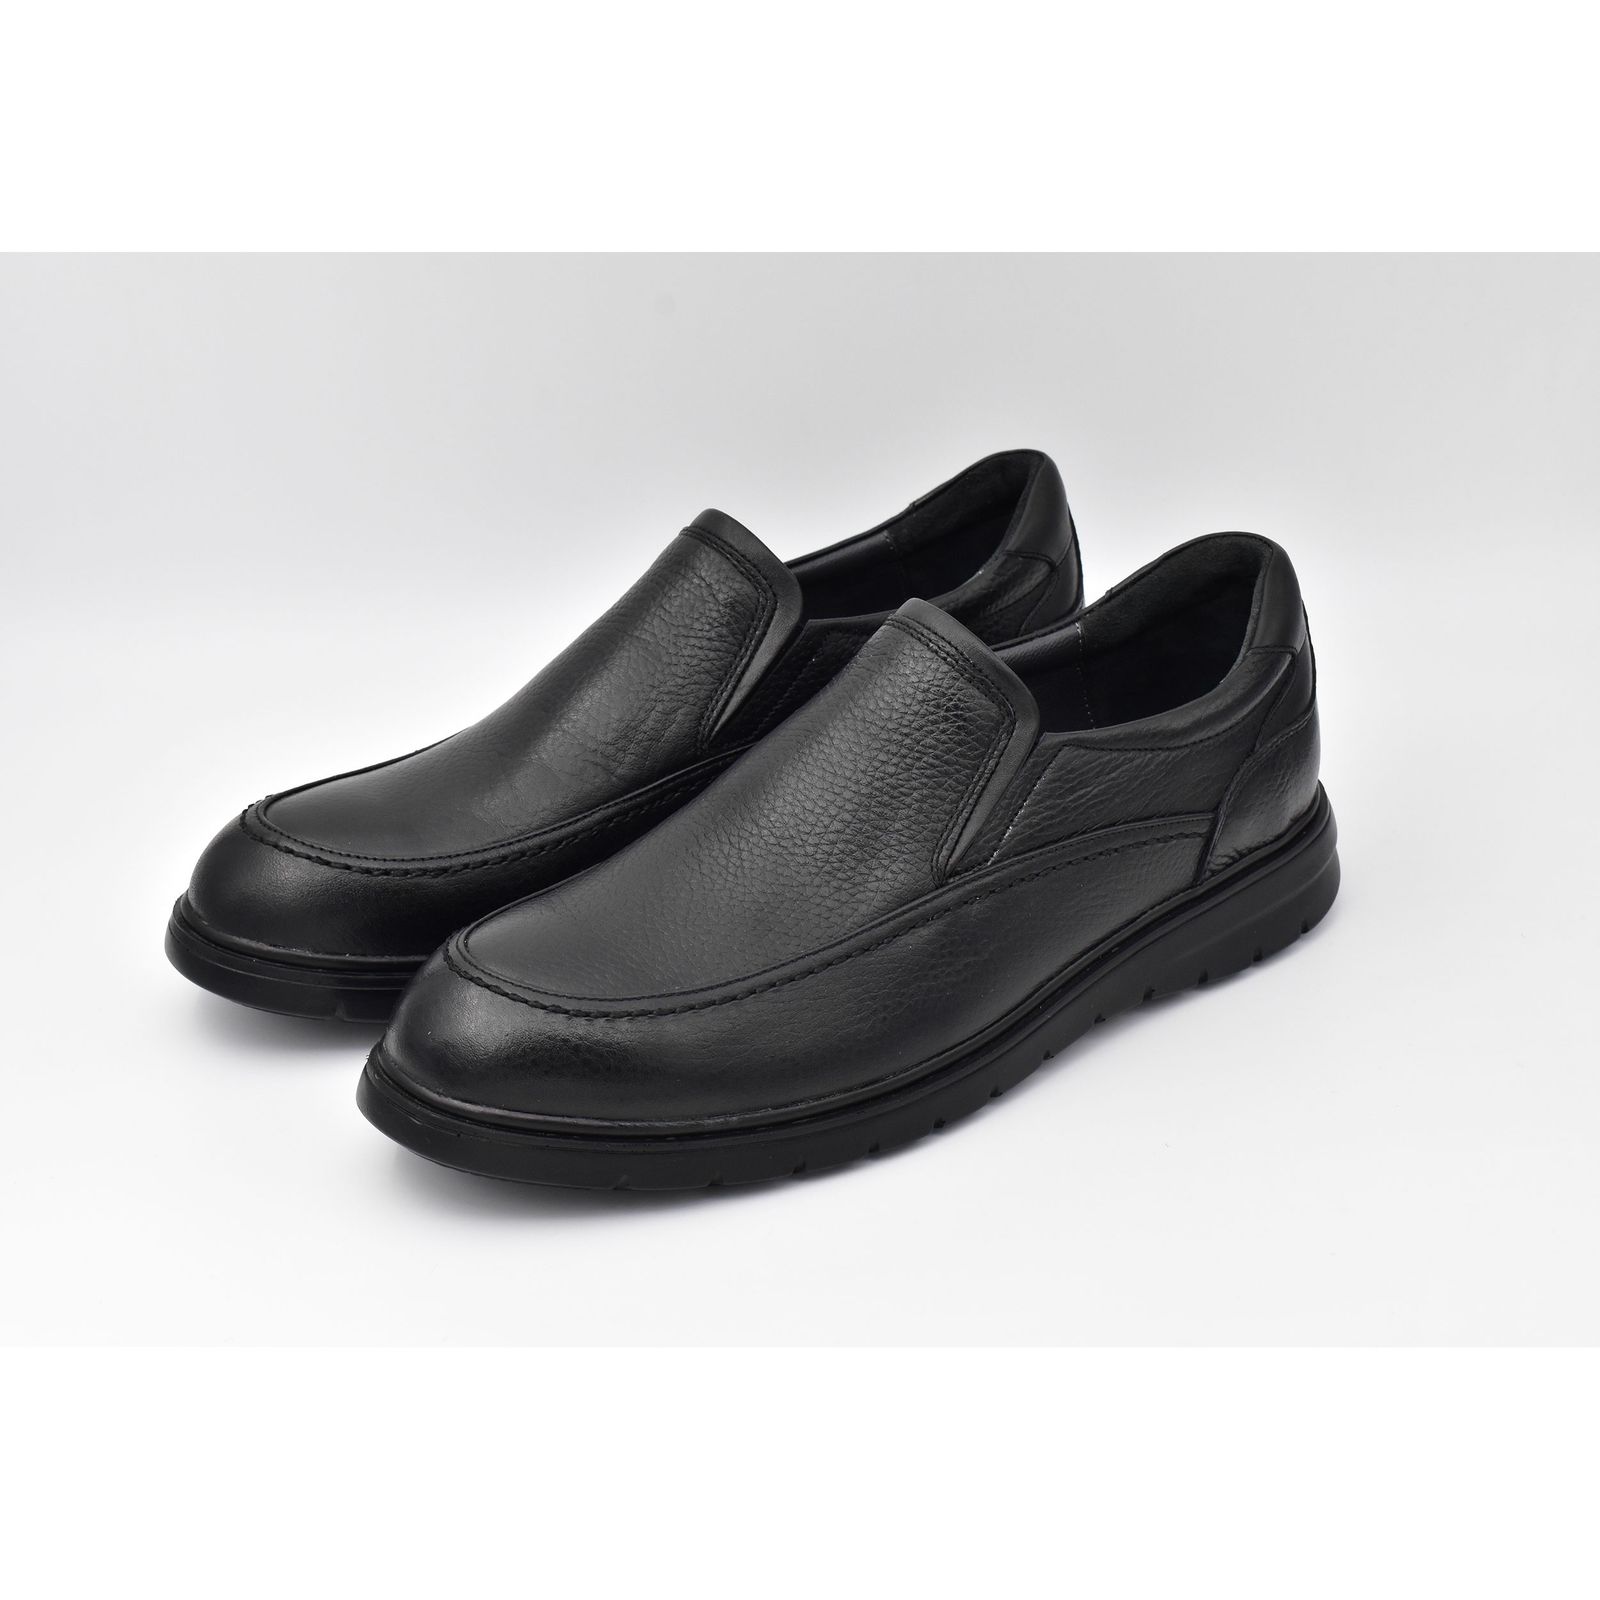 کفش مردانه پاما مدل TZZ کد G1340 -  - 4